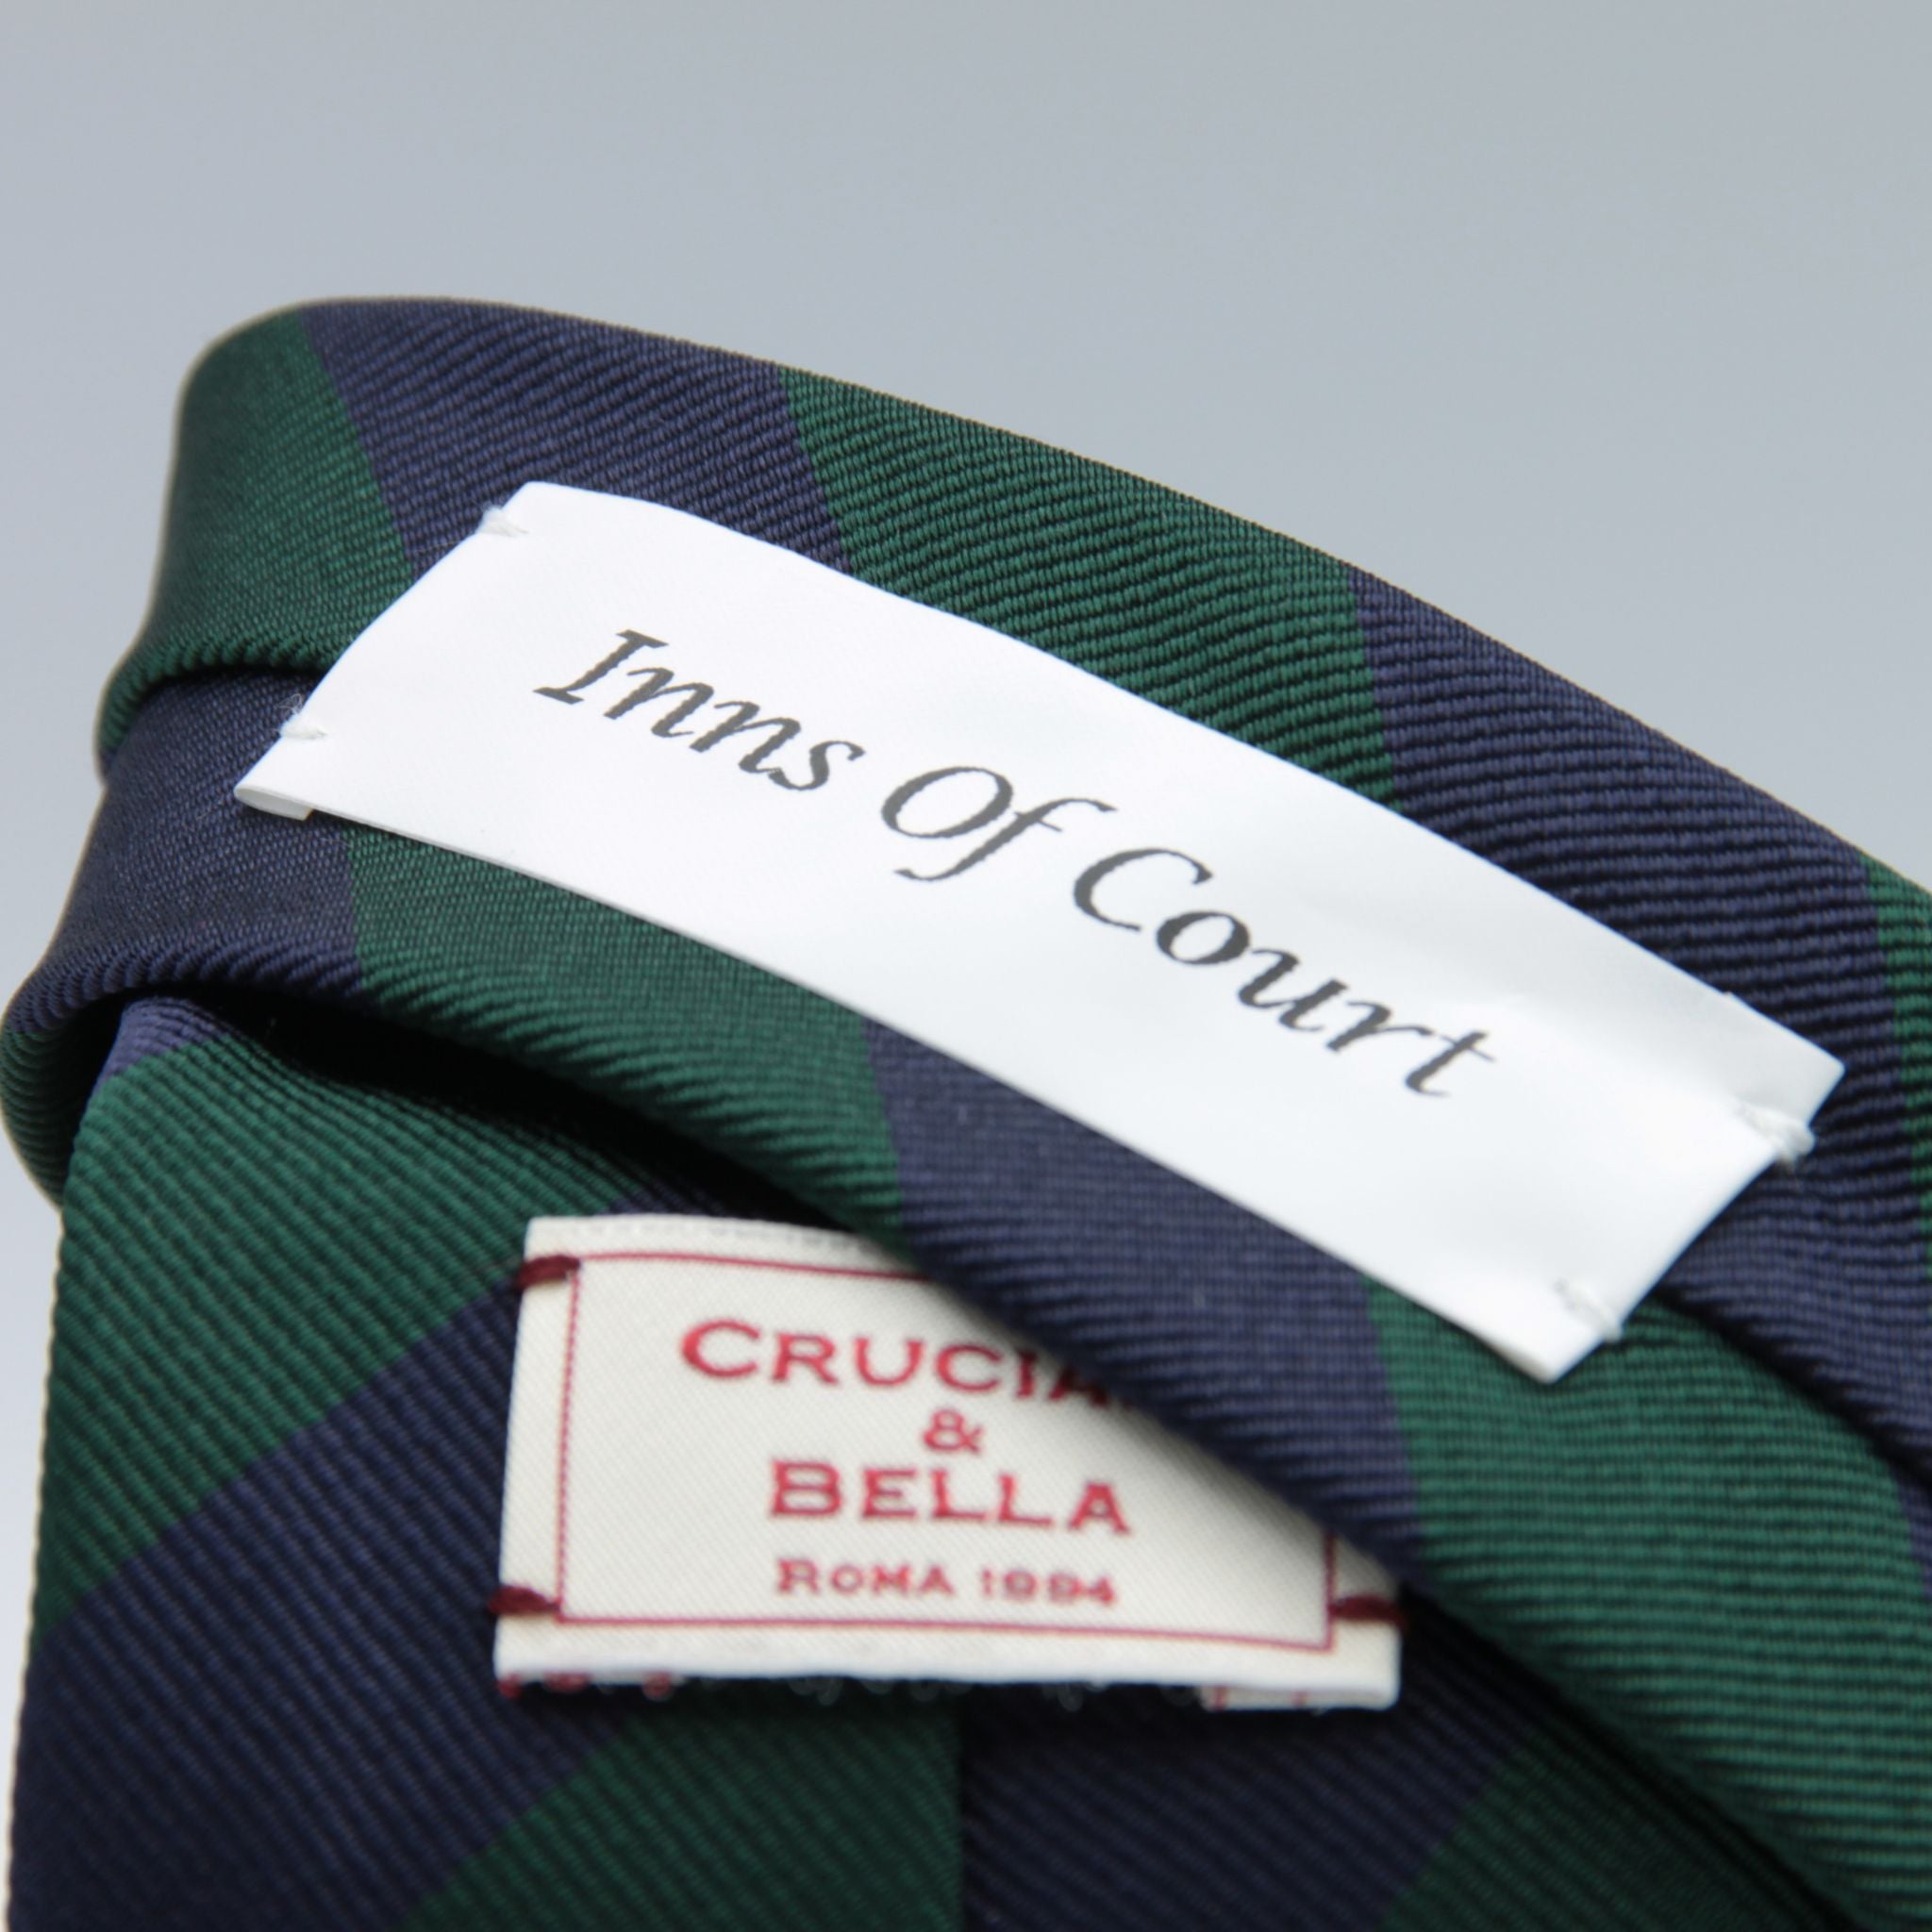 Cruciani & Bella 100% Silk Slim Shape Jacquard  Unlined Regimental "Inns of Court" Blue and Dark Green stripes tie Handmade in Italy 8 cm x 150 cm #7698